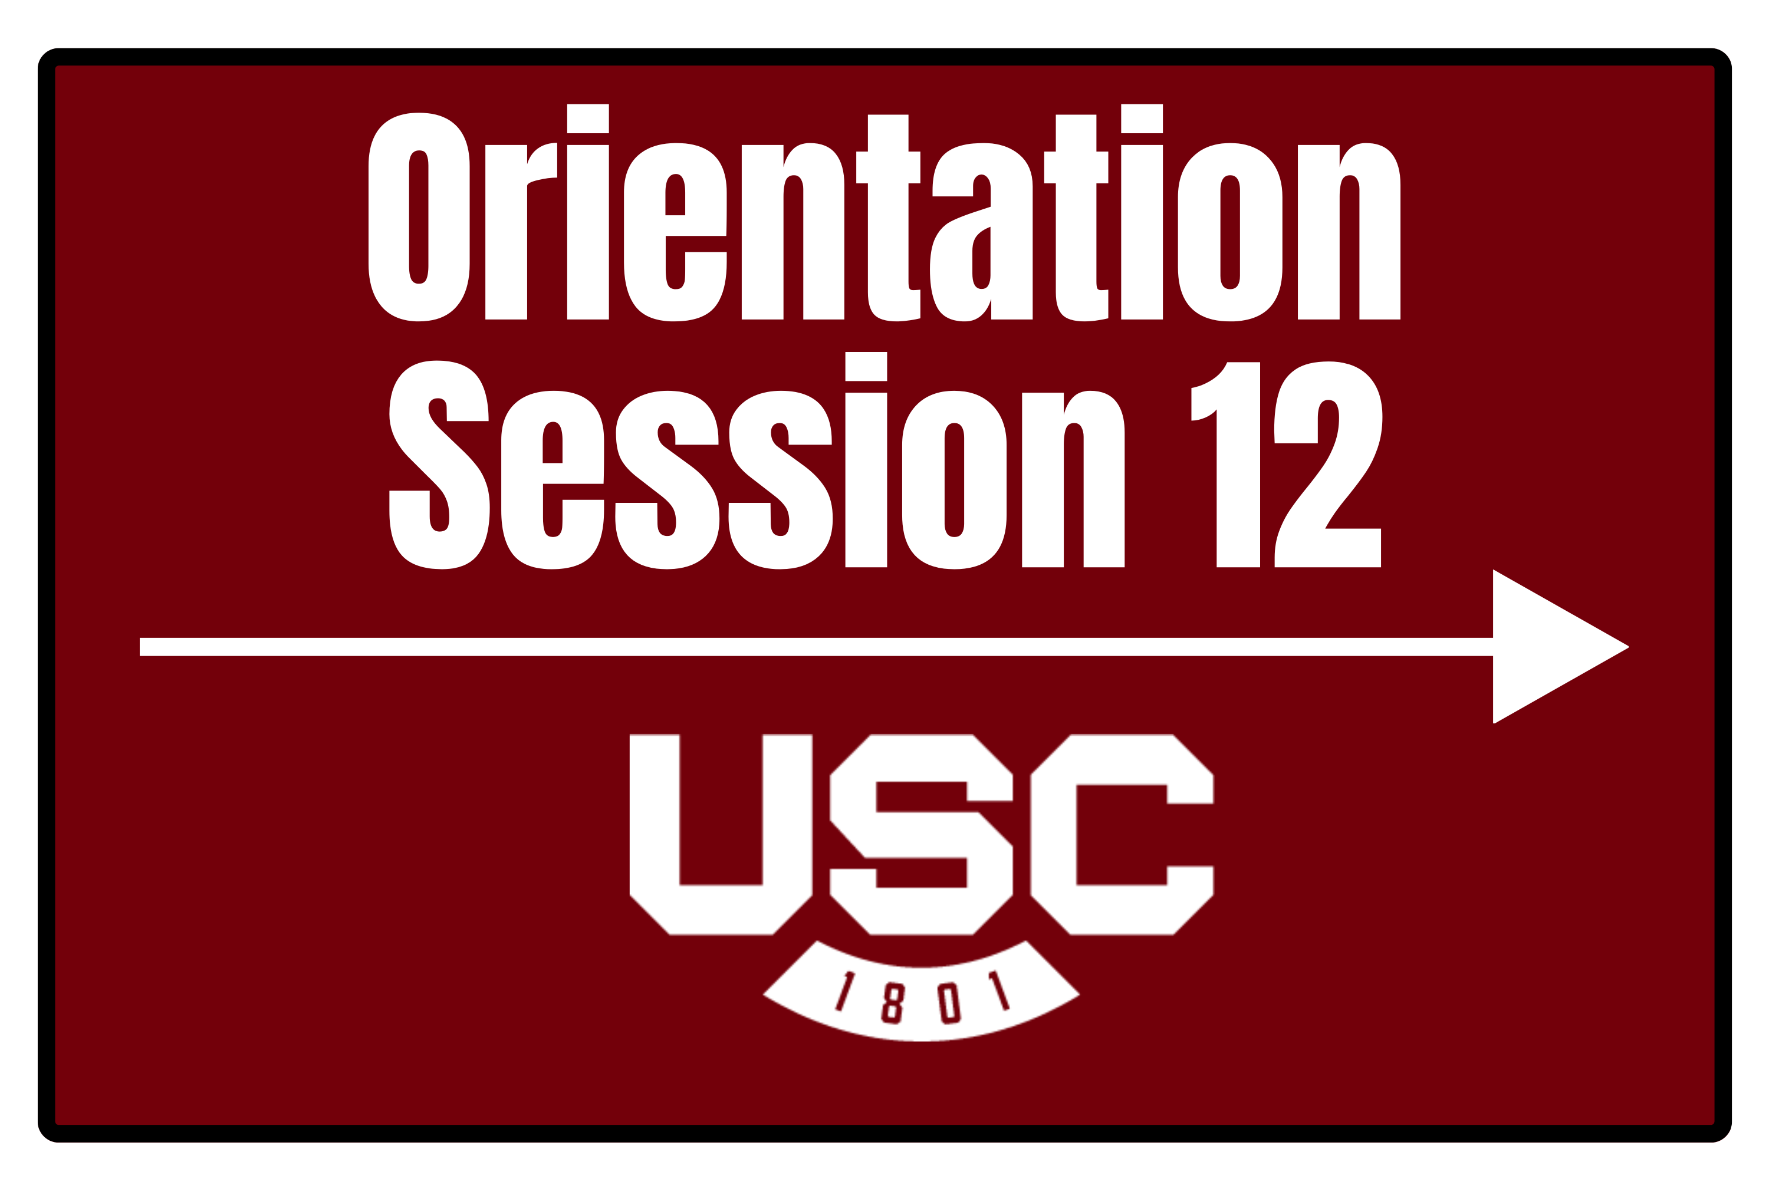 Orientation Session 12: July 8 - 9